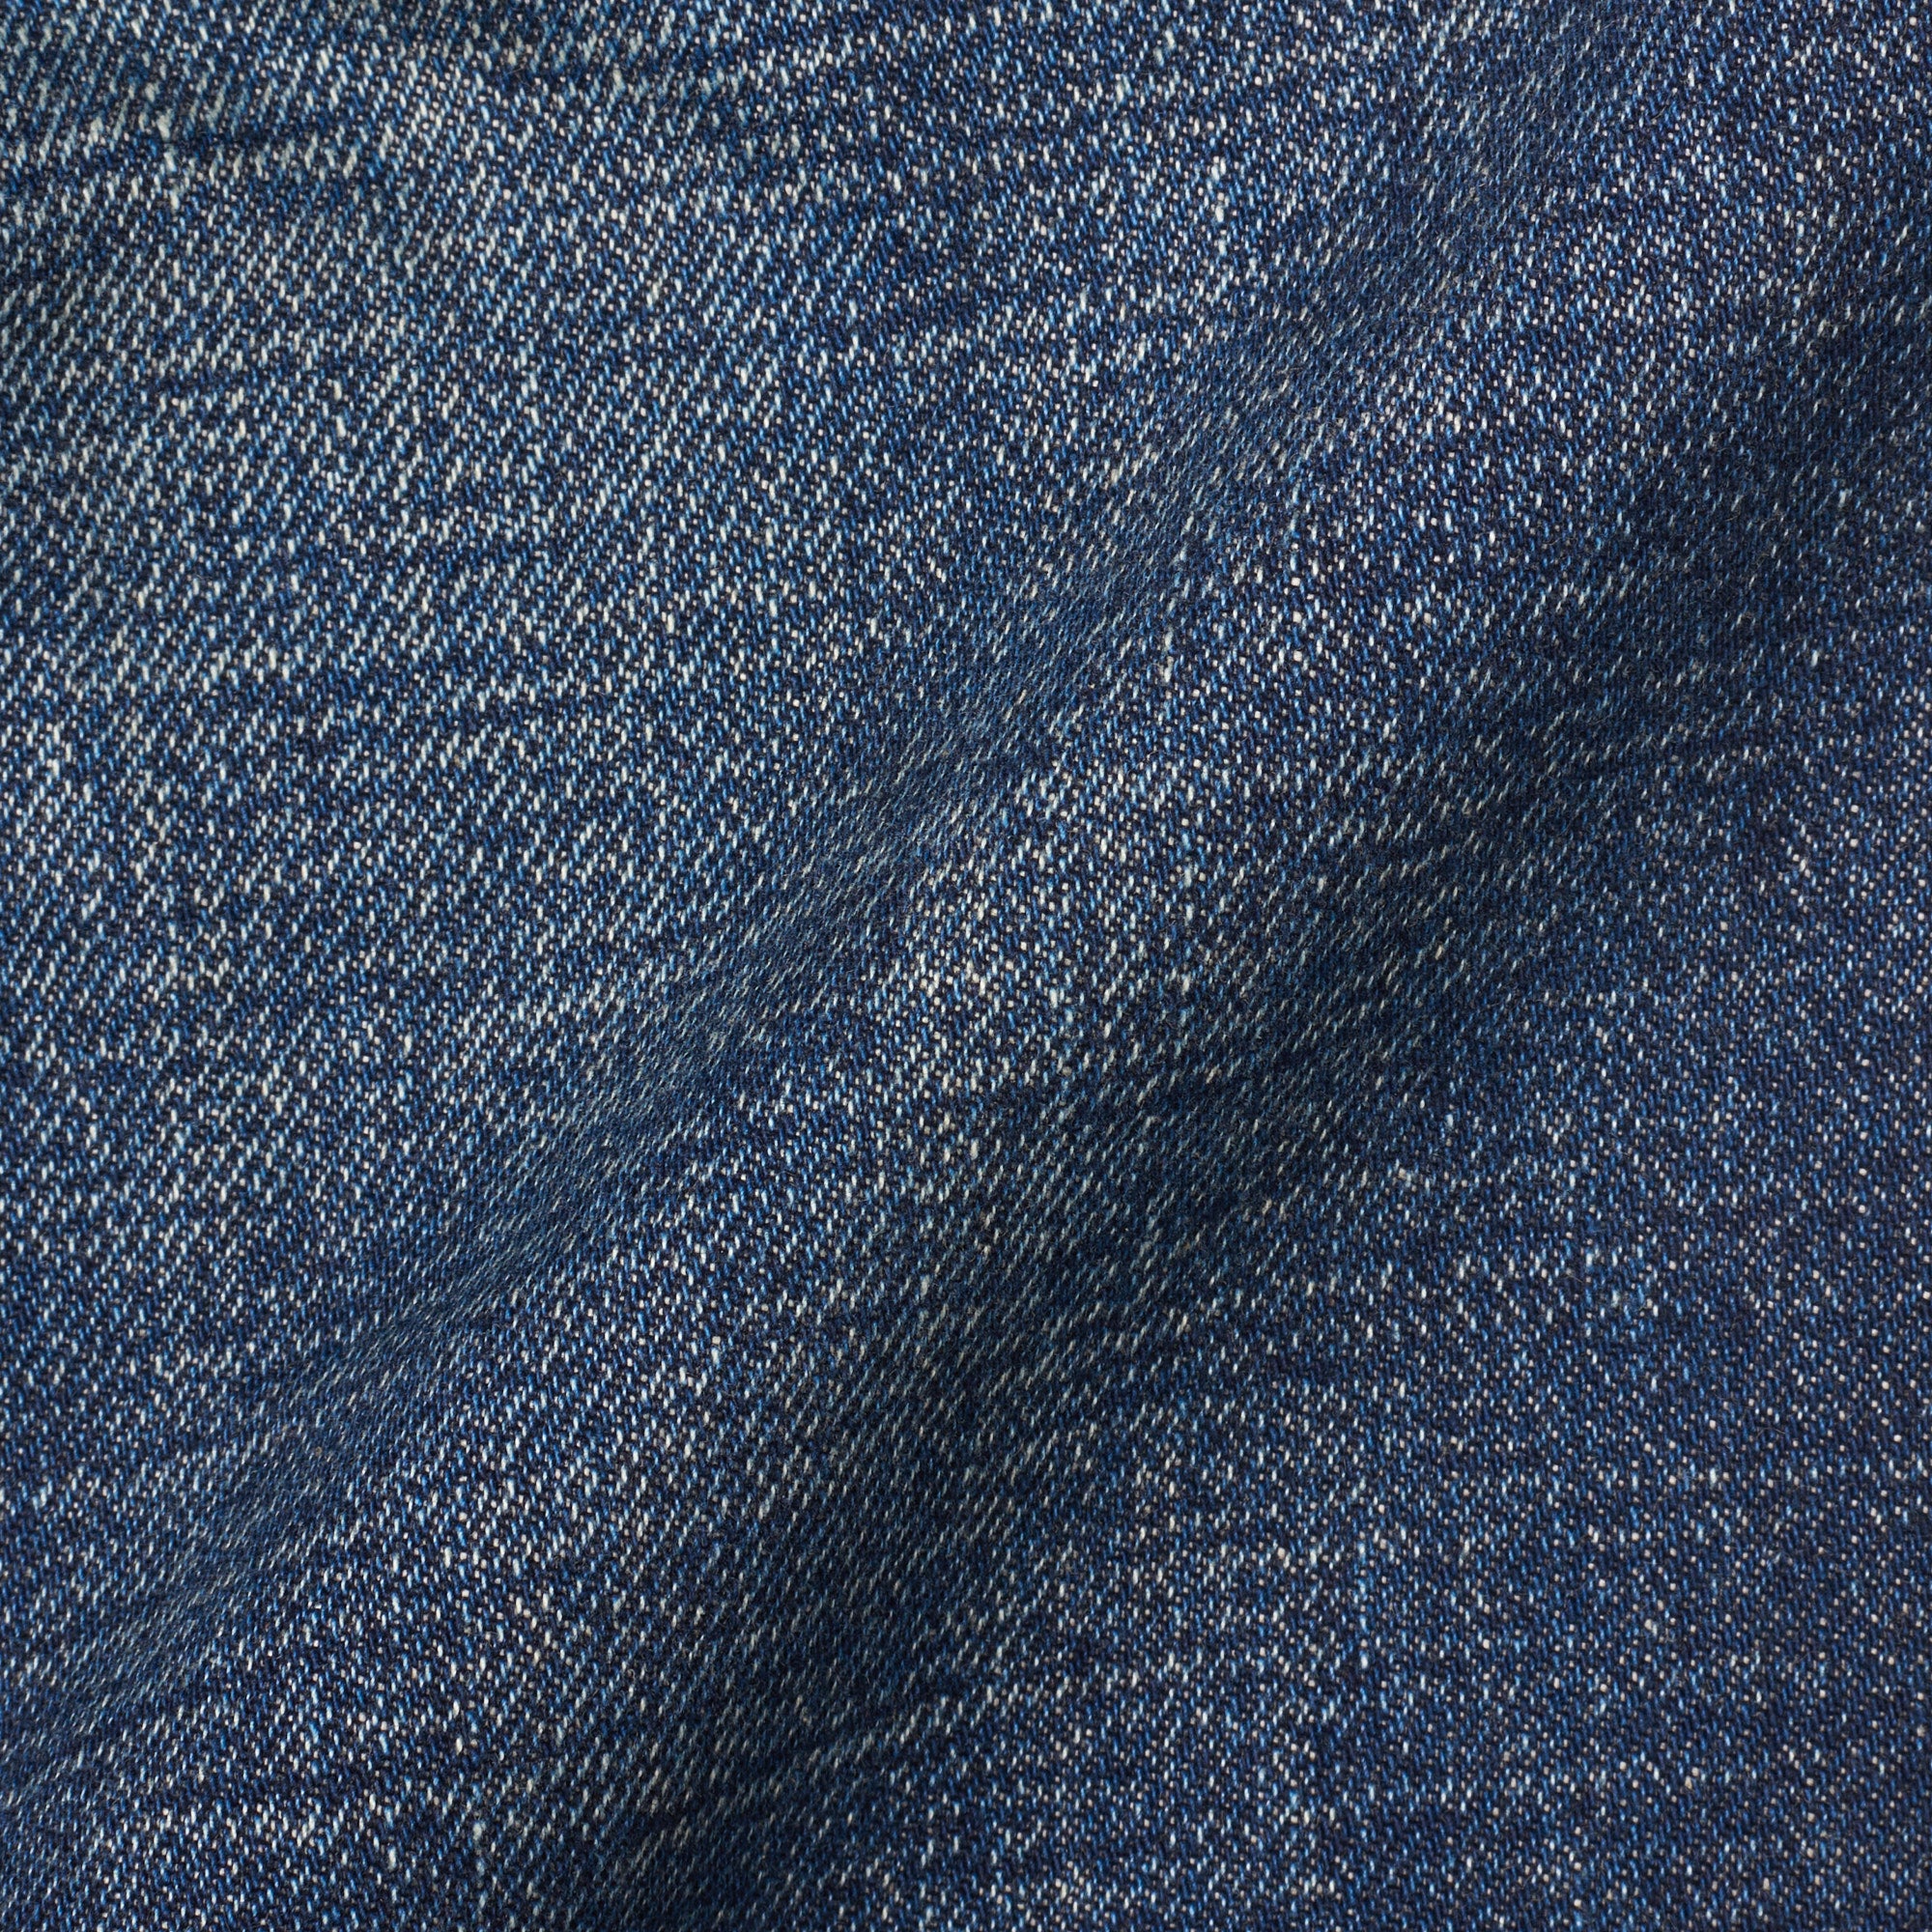 DIOR Made in Japan Blue Denim Jeans Pants US 32 Slim Fit DIOR